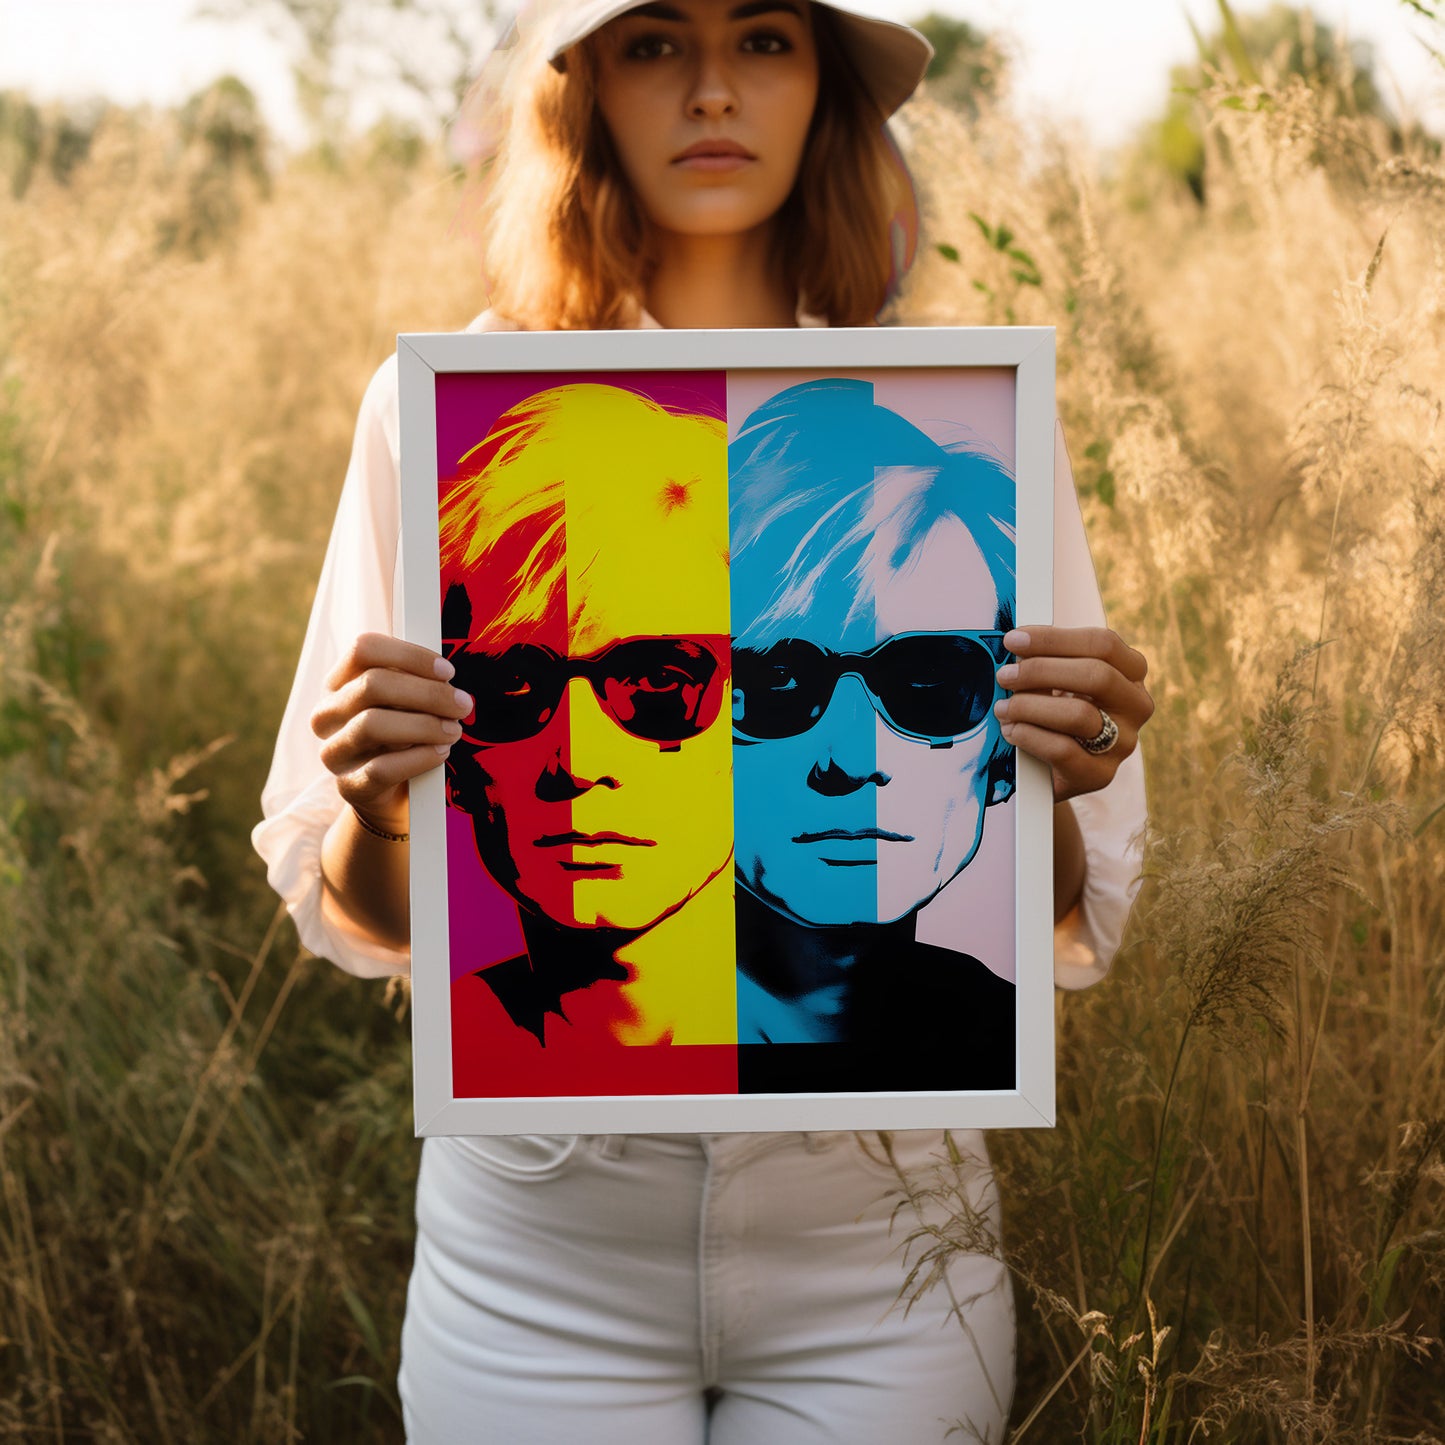 Woman holding a colorful pop art portrait in a field.